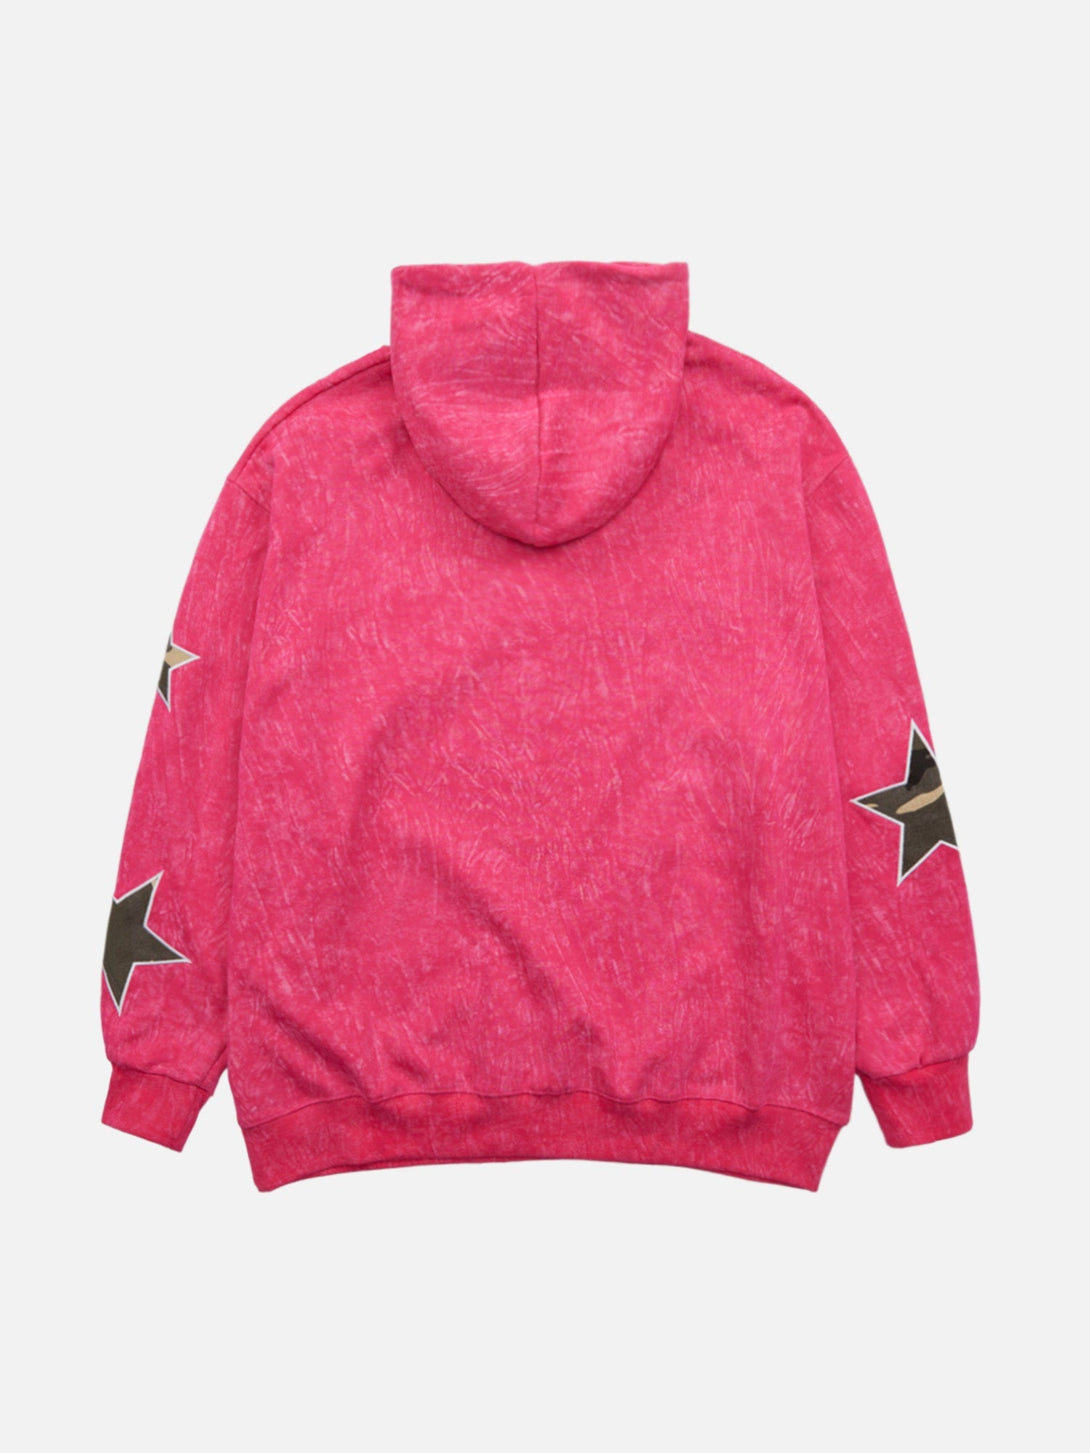 Majesda® - American Retro Patch Star Hooded Sweatshirt - 1969- Outfit Ideas - Streetwear Fashion - majesda.com